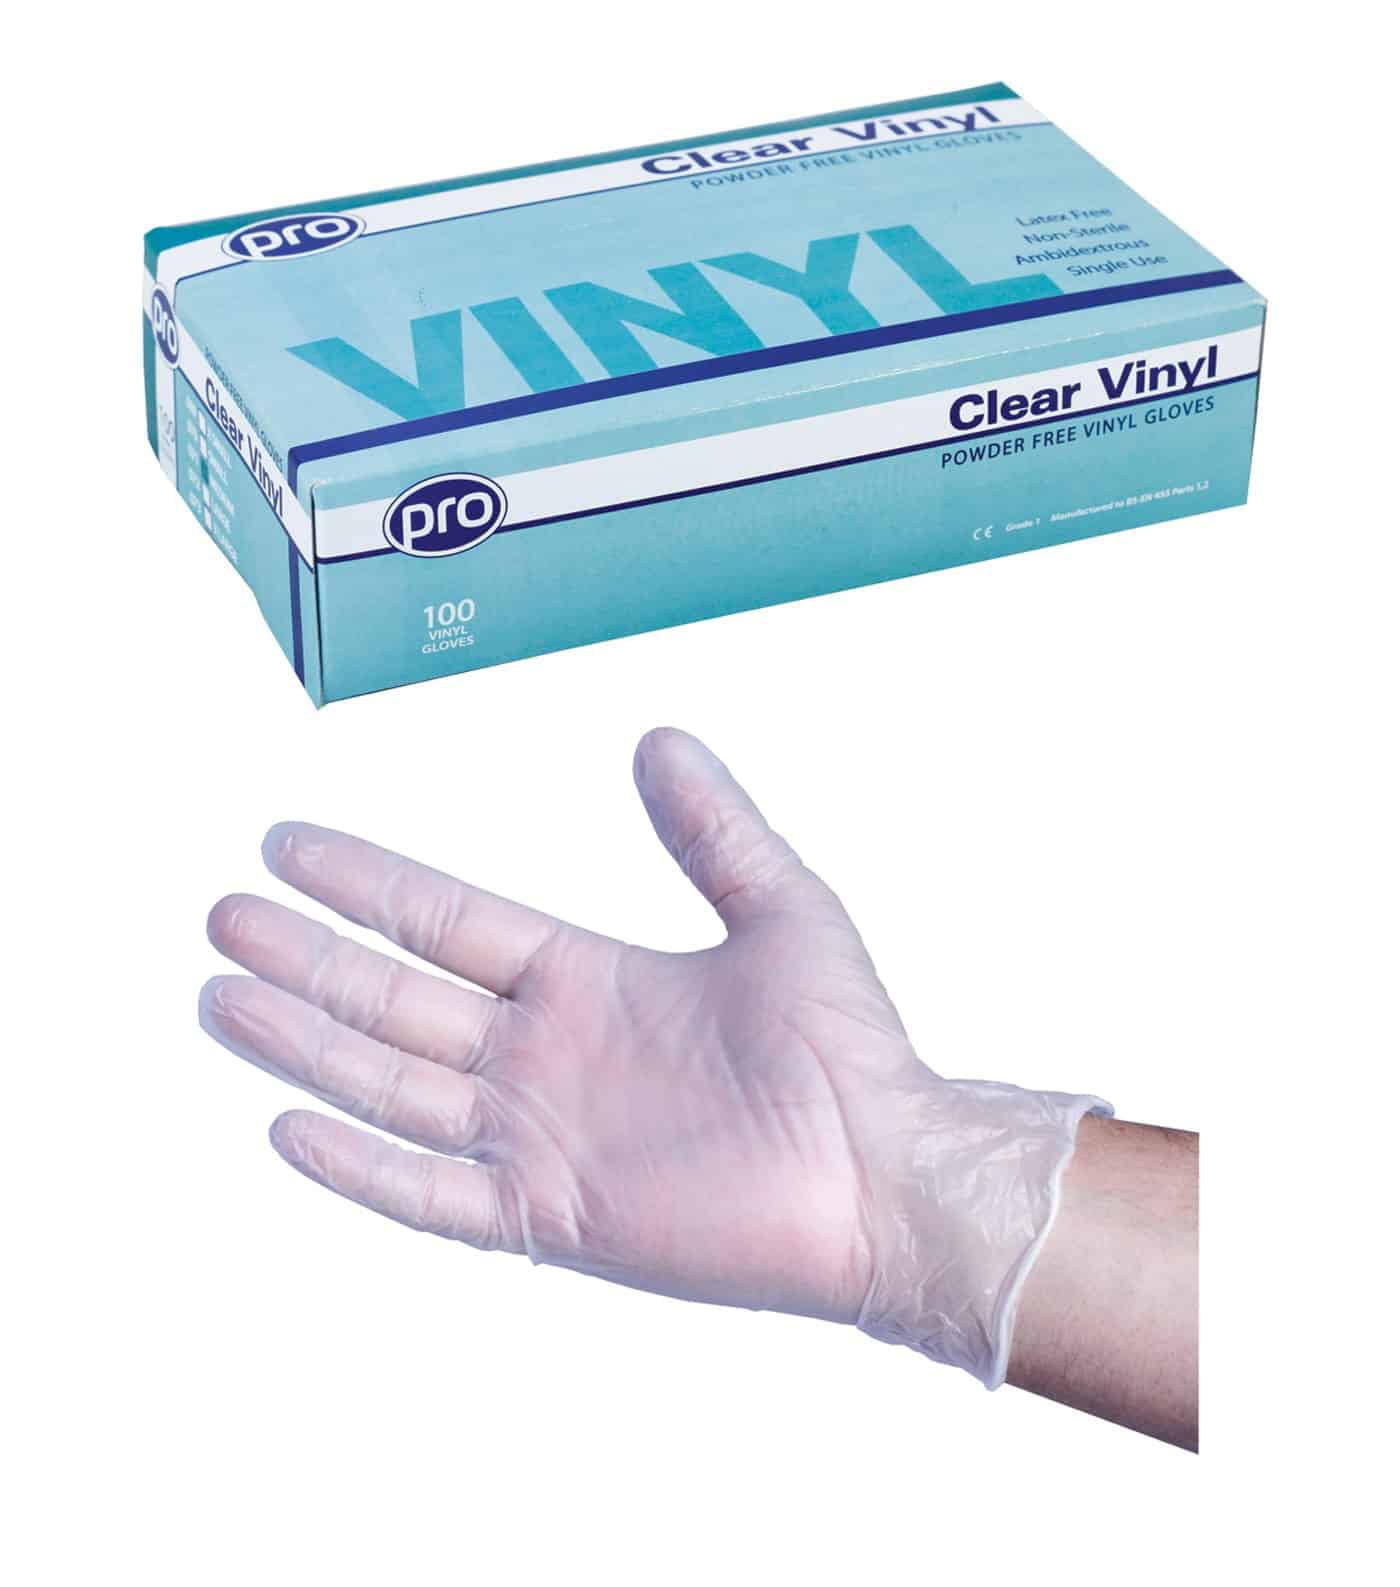 Agenda Pro Vinyl Powder Free Disposable Gloves (100)